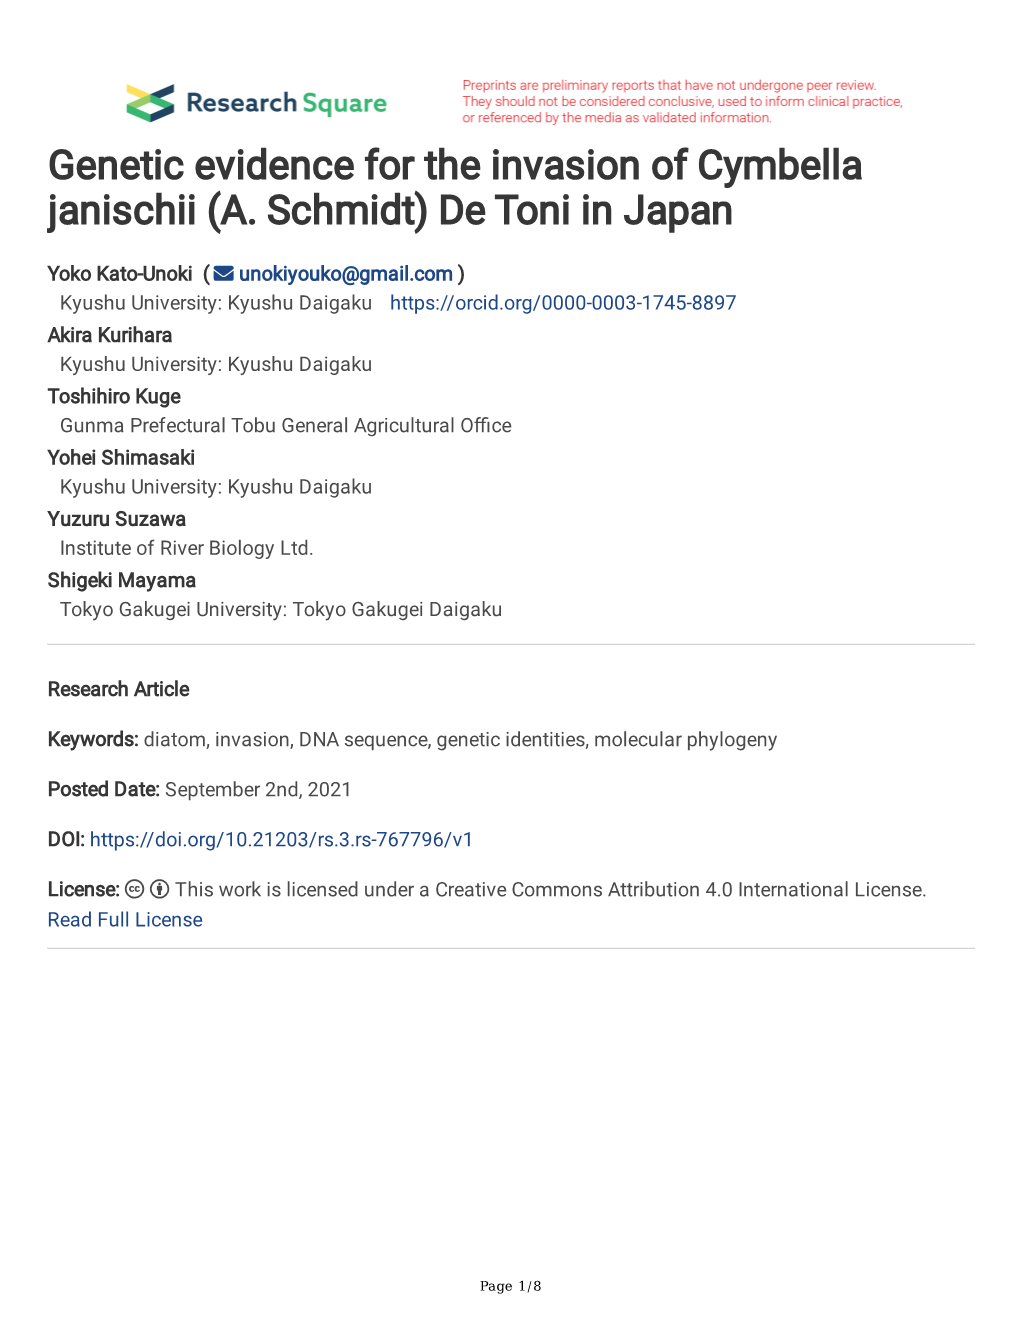 Genetic Evidence for the Invasion of Cymbella Janischii (A. Schmidt) De Toni in Japan